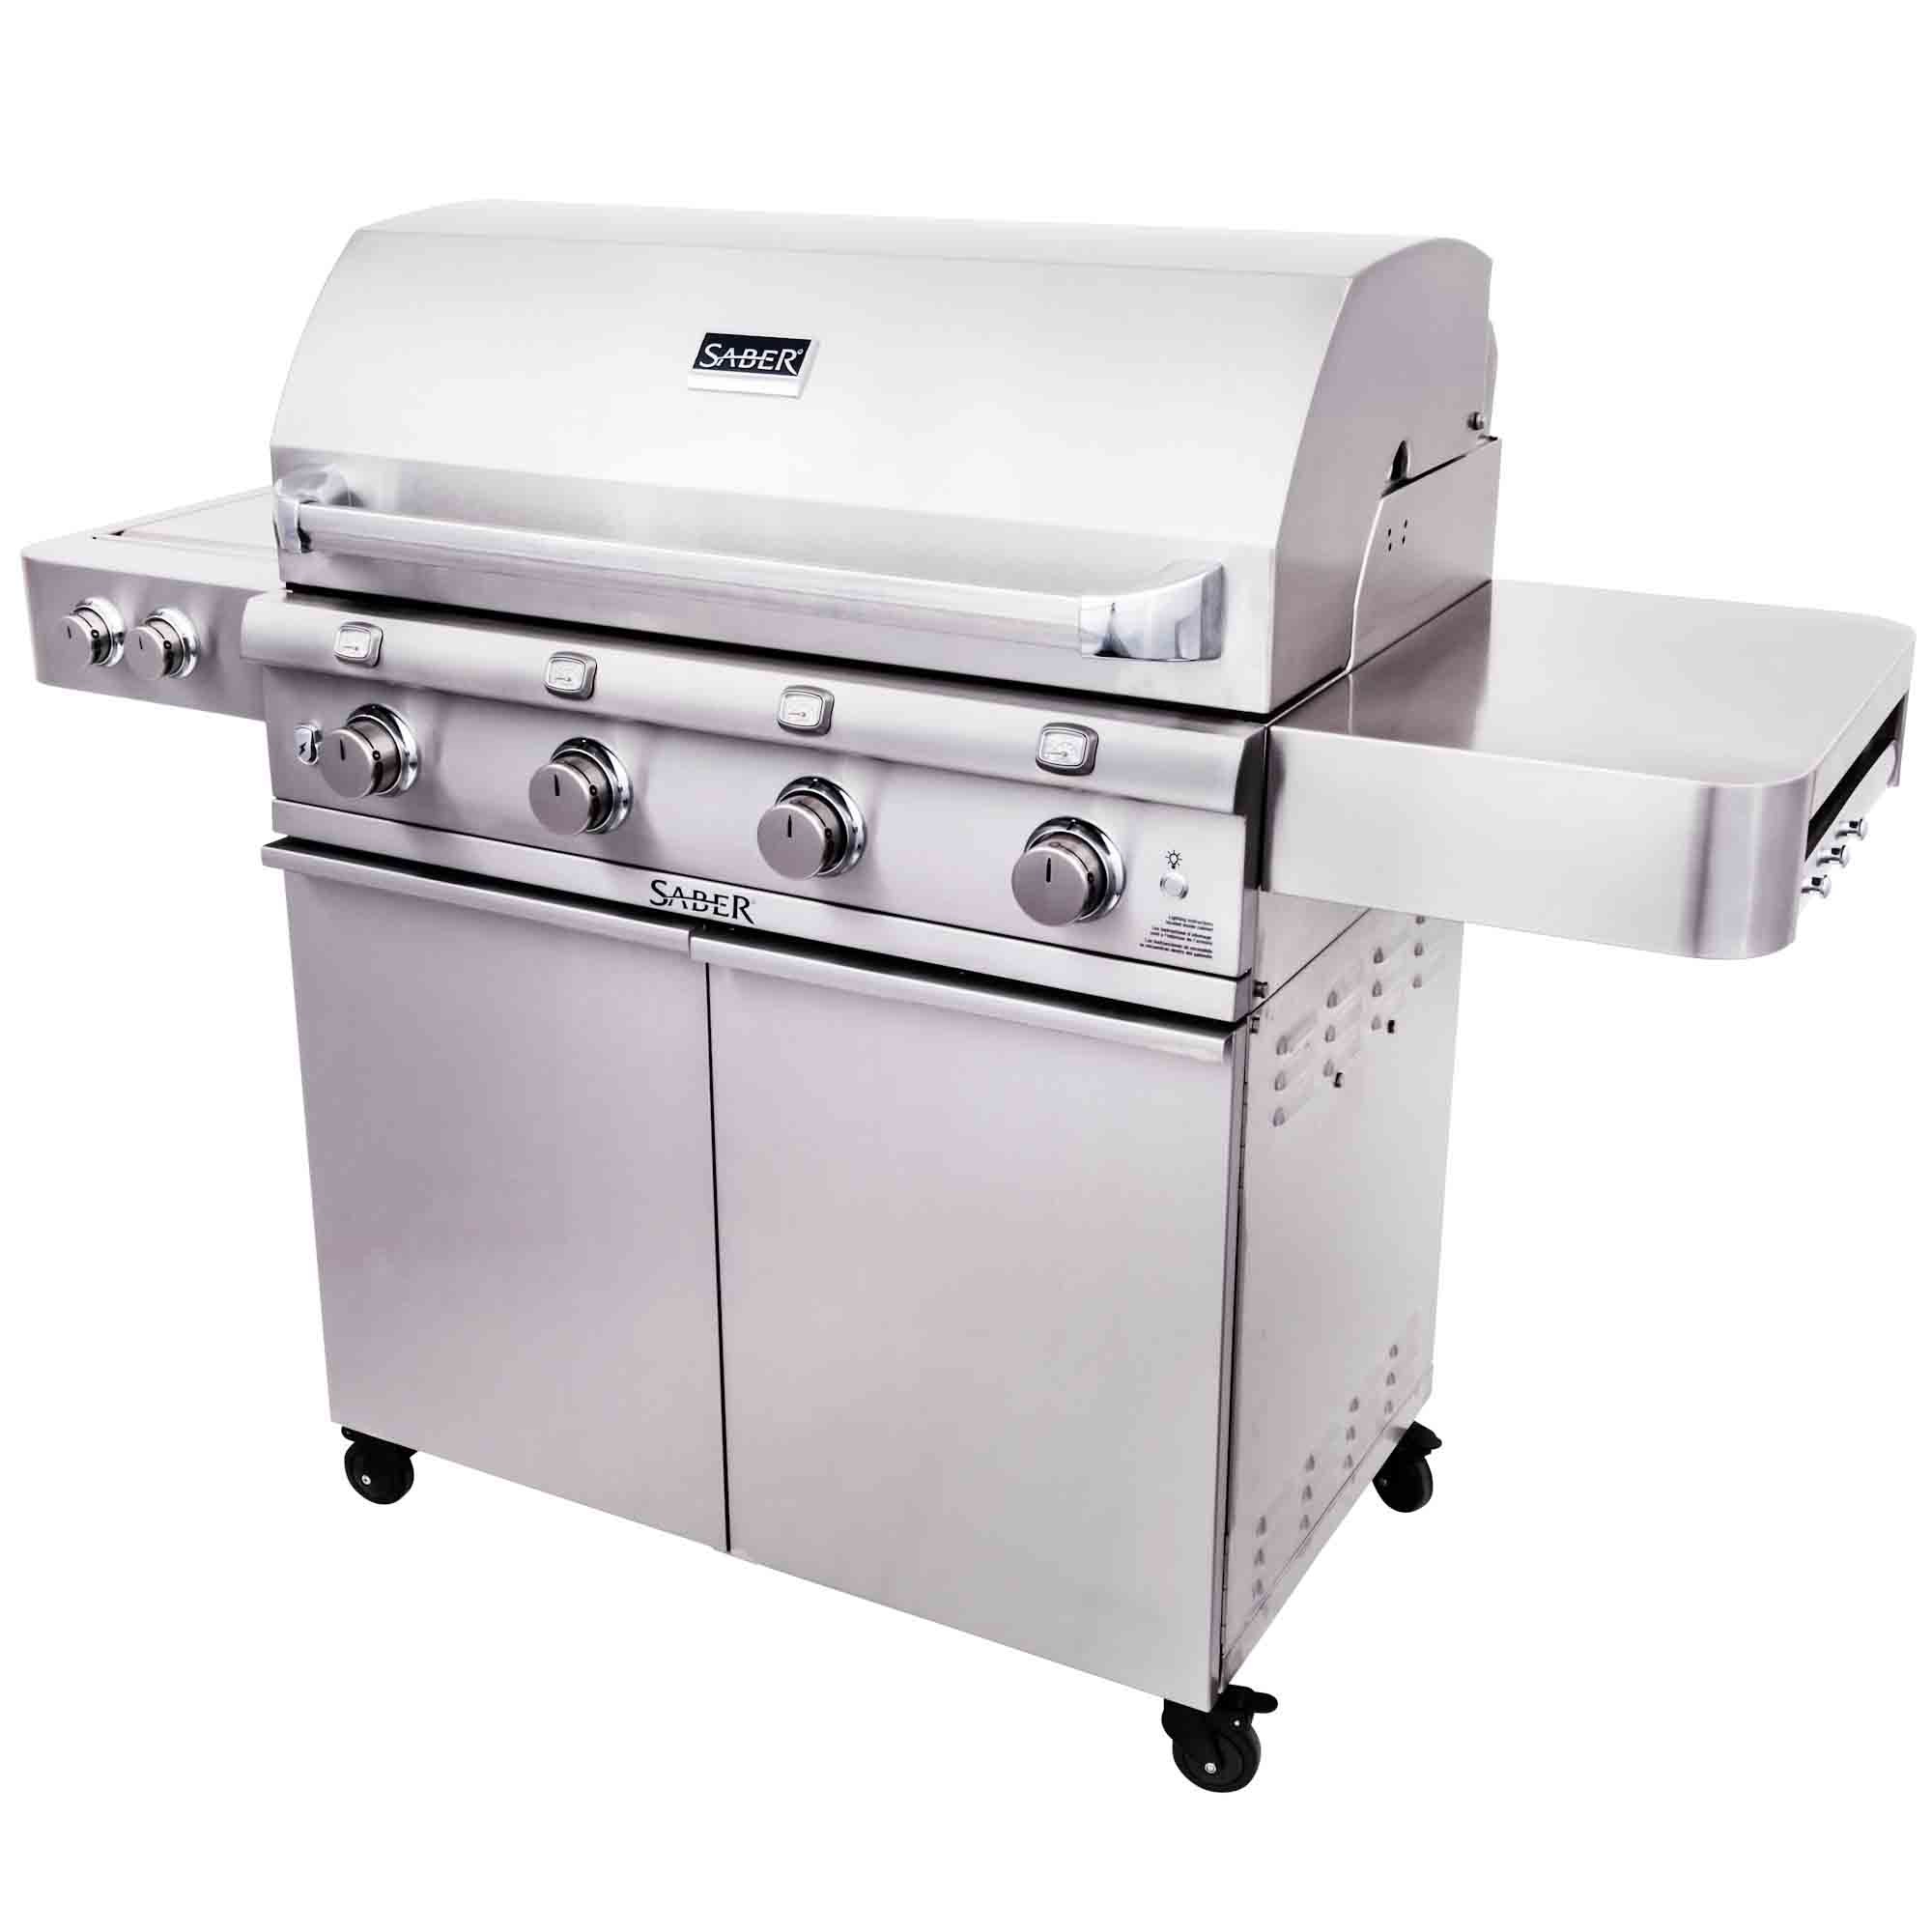 SABER® Stainless 4-burner propane grill